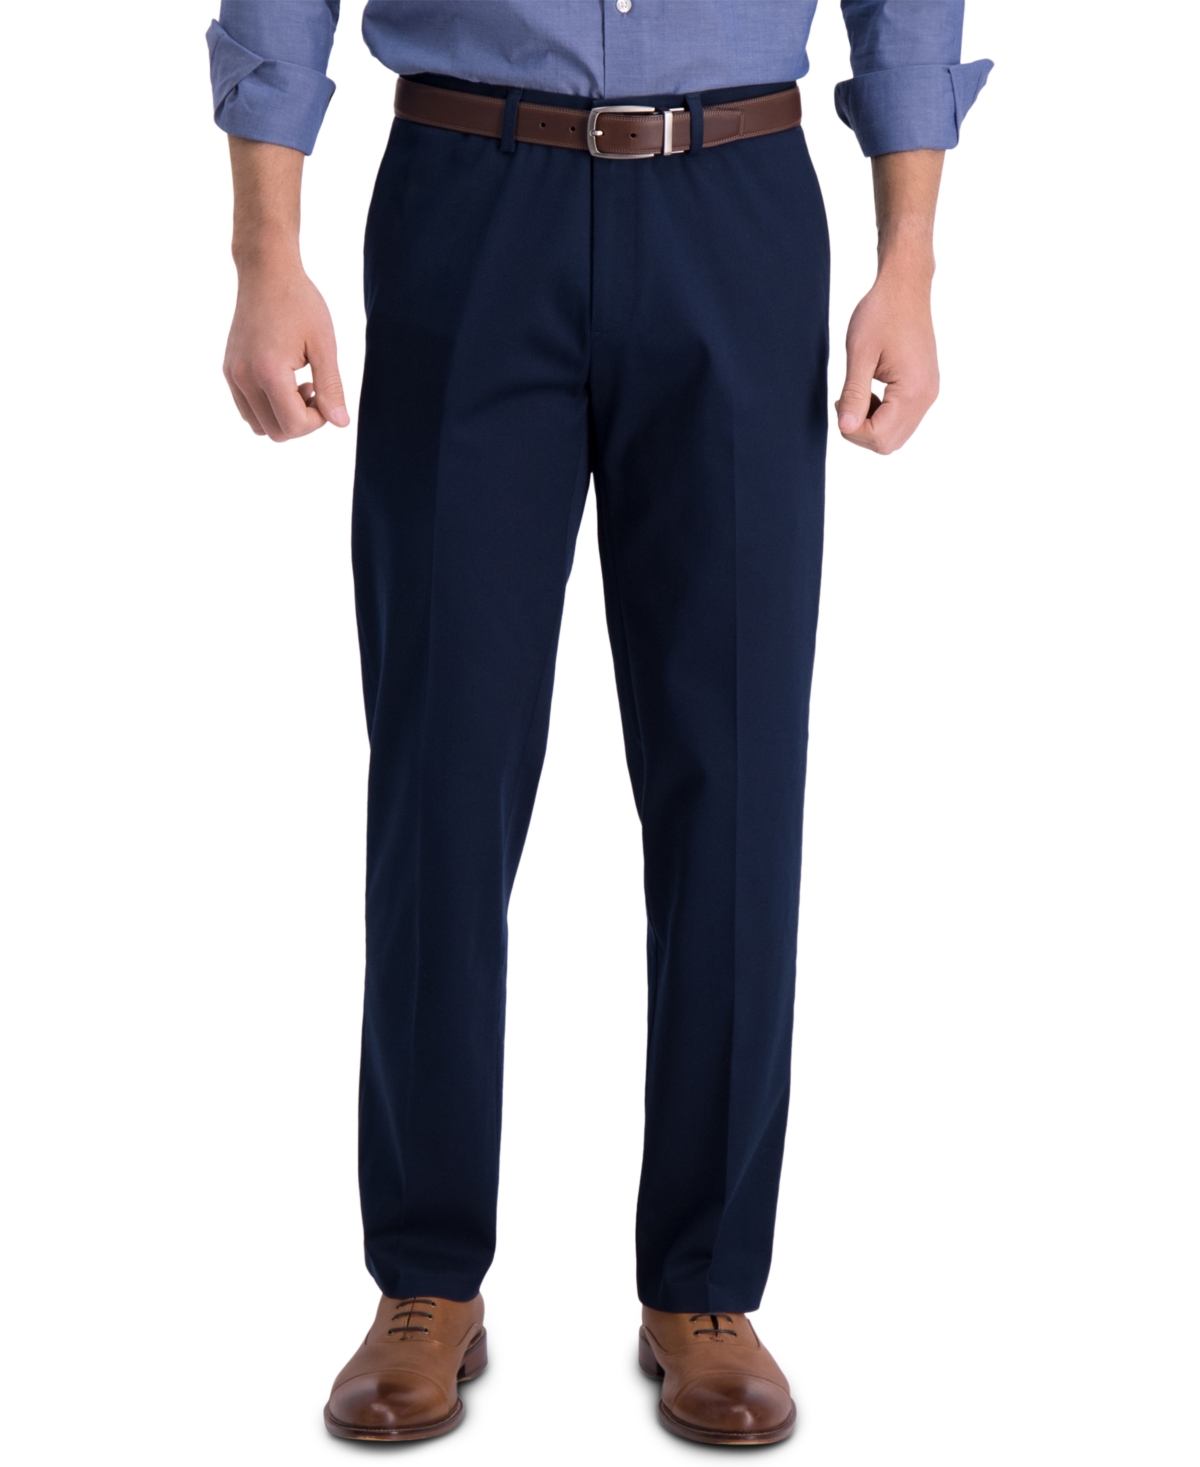 Men's Iron Free Premium Khaki Straight-Fit Flat-Front Pant - Dark Navy